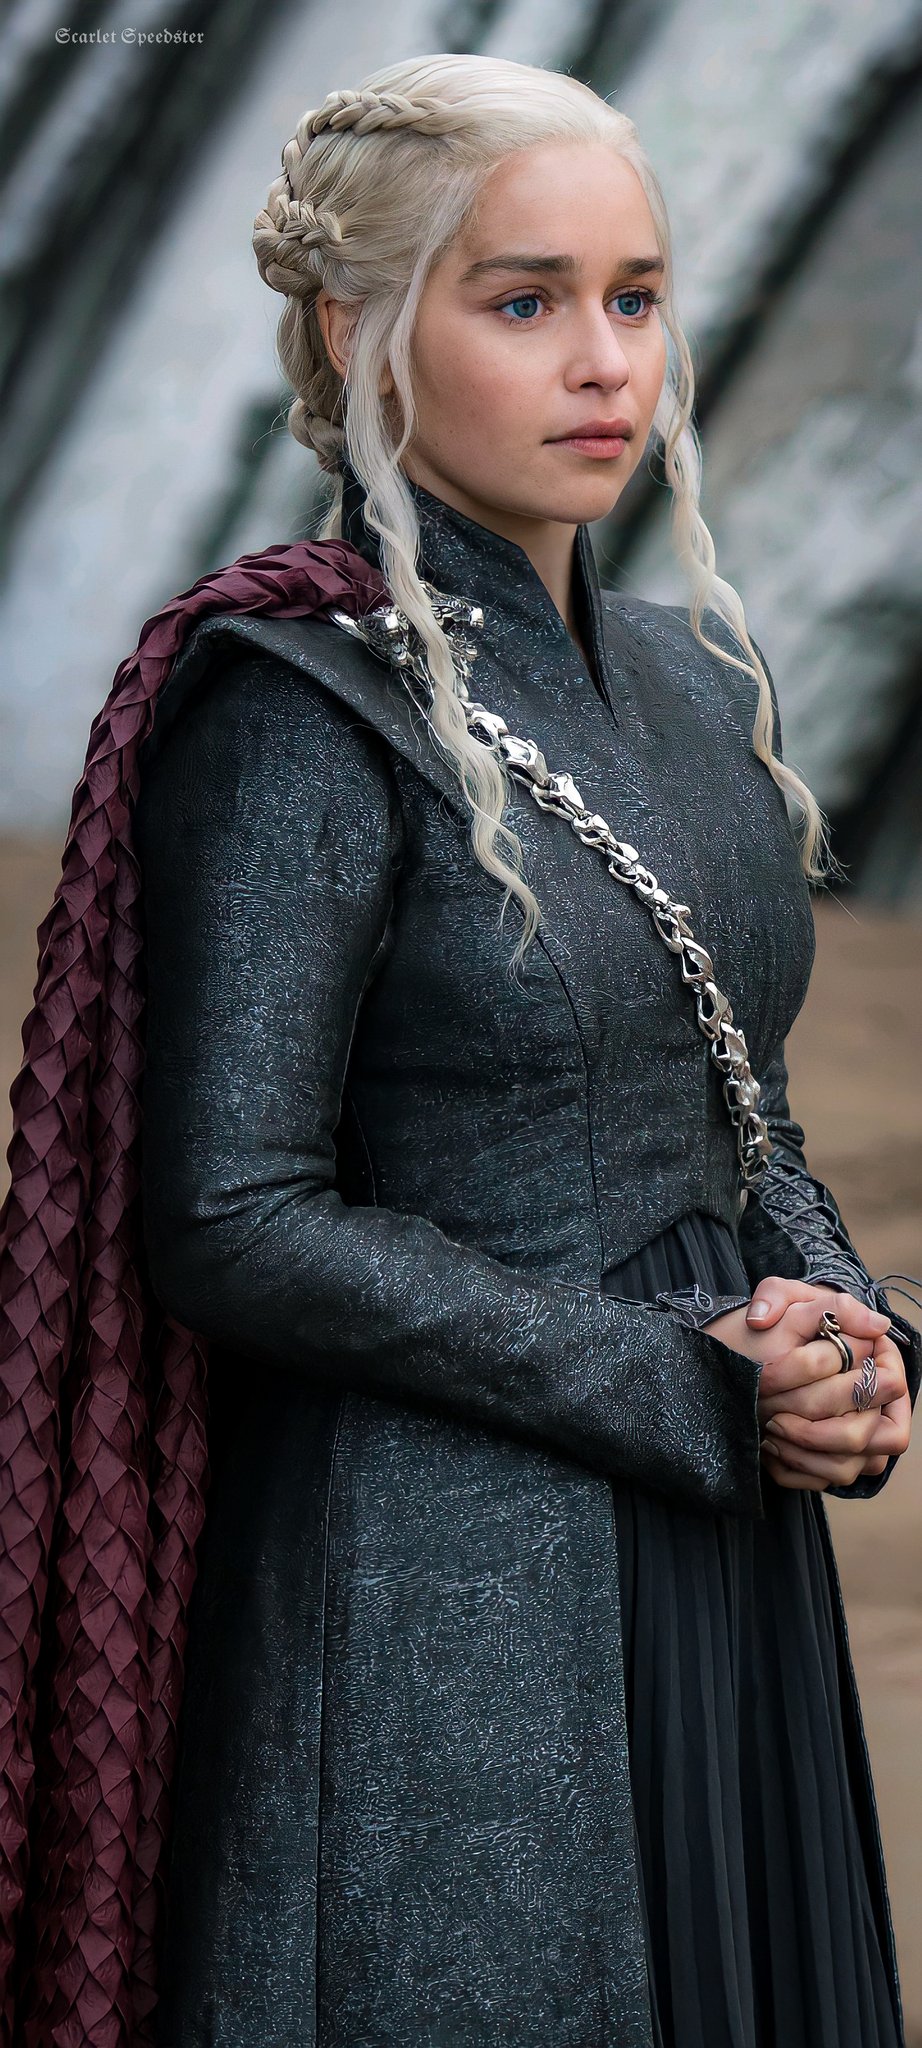 Daenerys Targaryen the women that you are